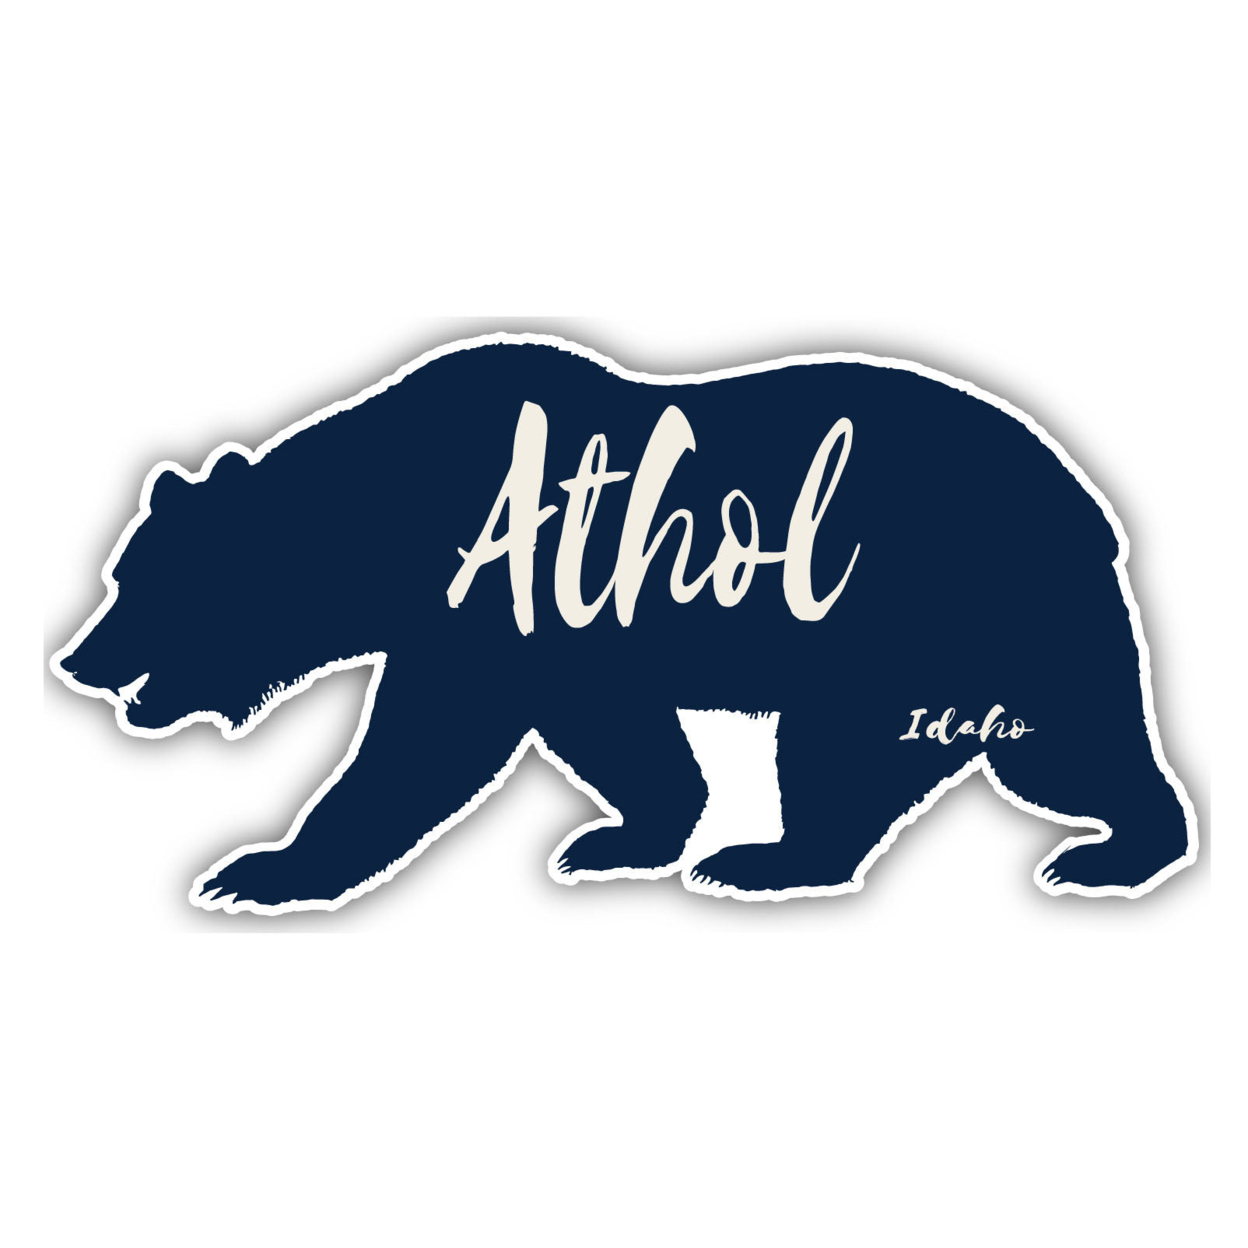 Athol Idaho Souvenir Decorative Stickers (Choose Theme And Size) - 4-Pack, 6-Inch, Bear